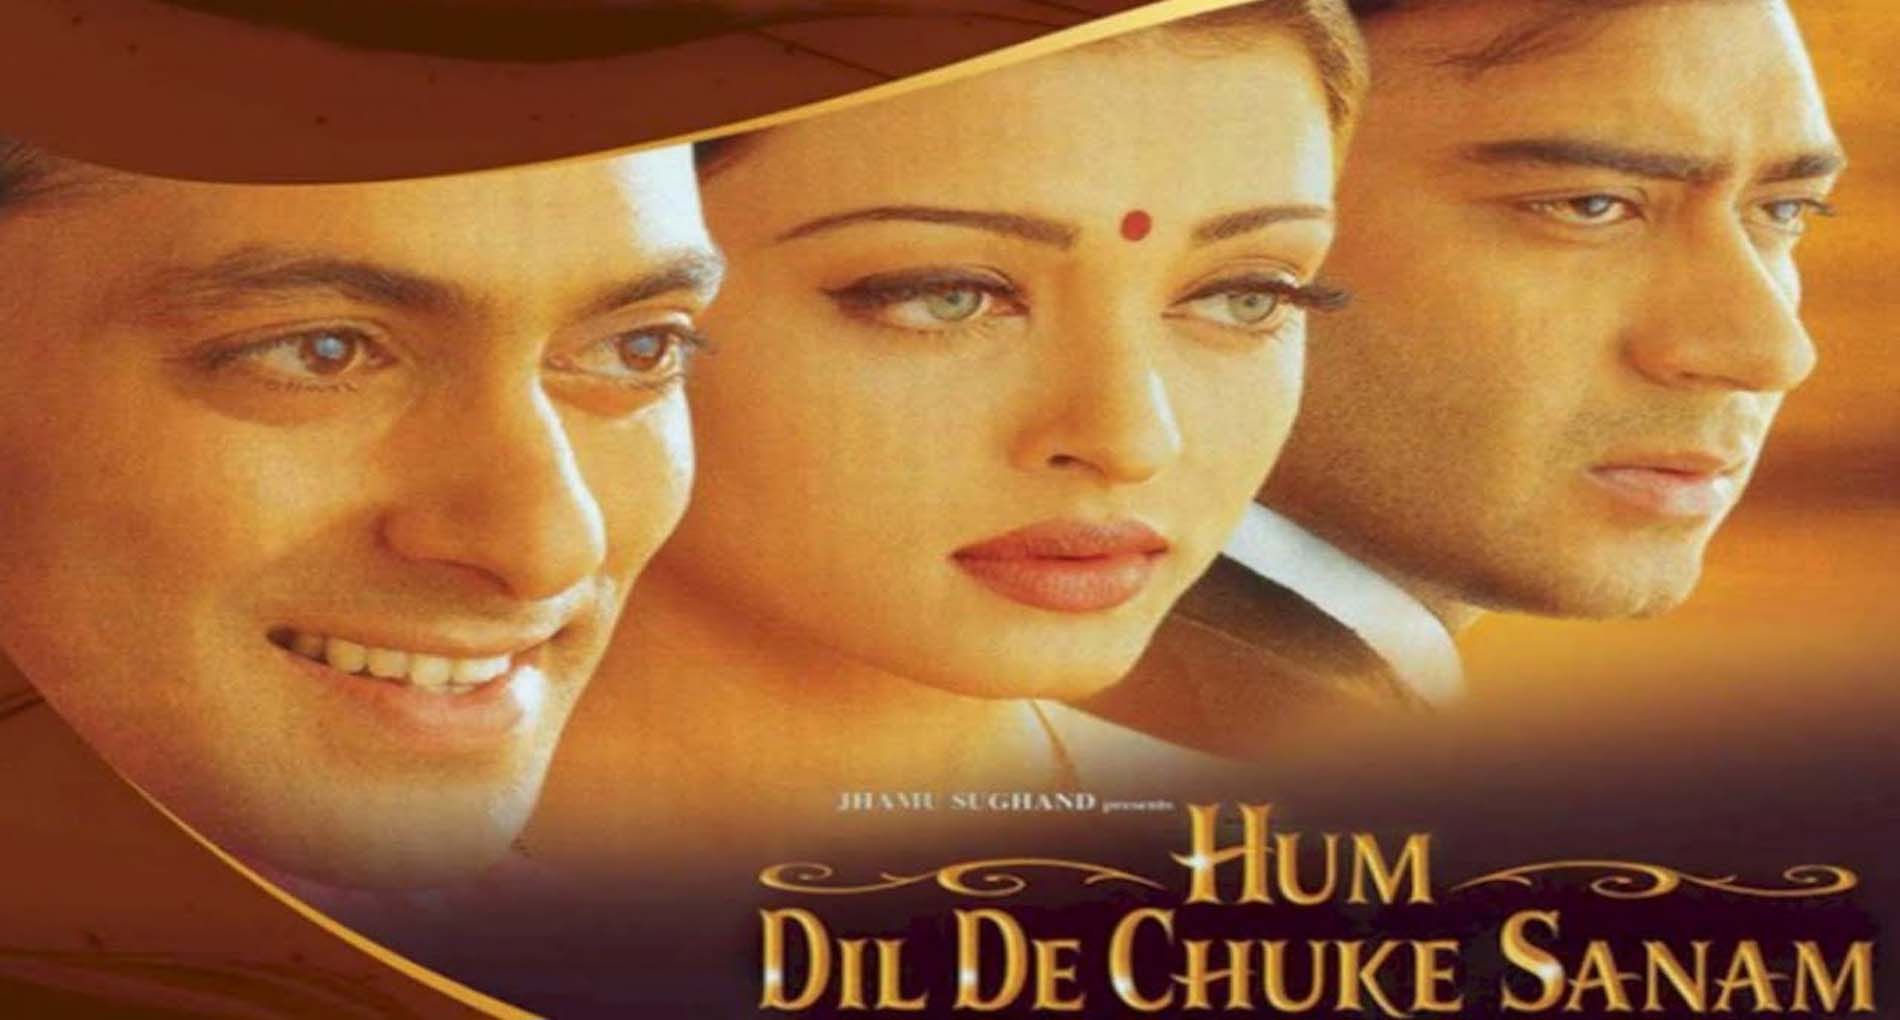 हम दिल दे चुके सनम Hum Dil De Chuke Sanam Lyrics in Hindi, ऐश्वर्या राय